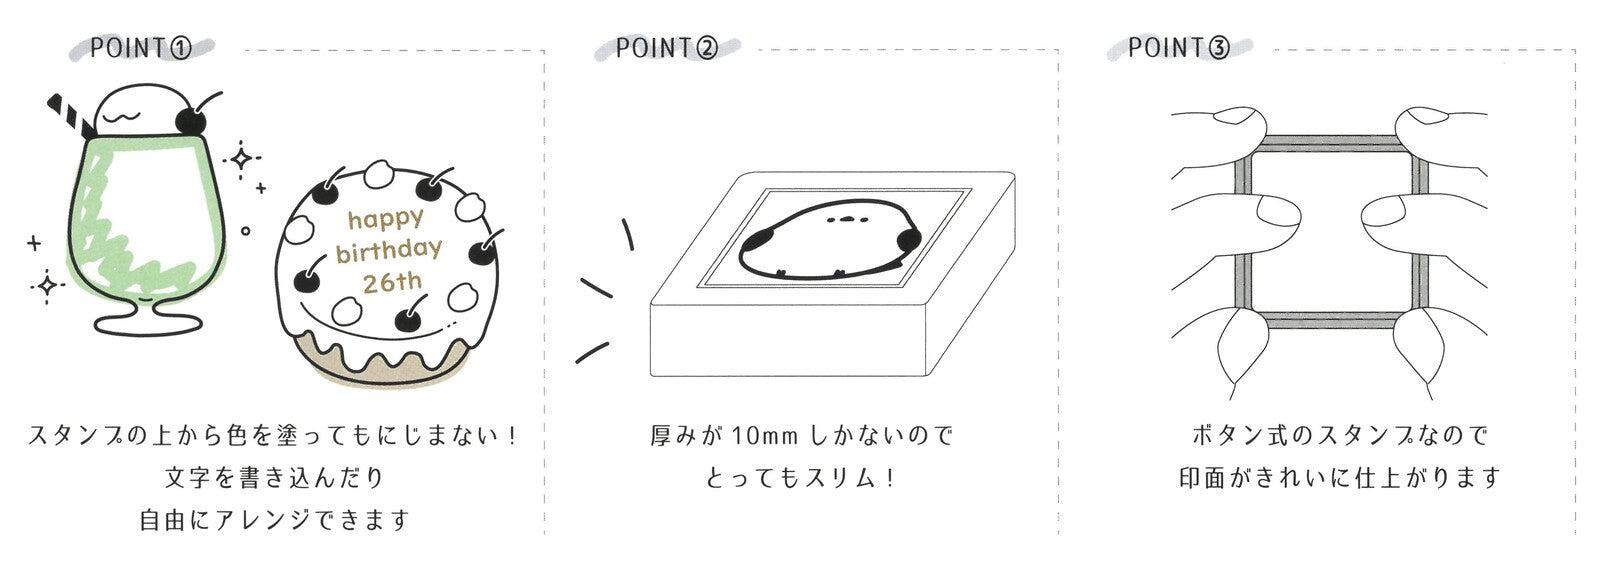 PiTAOSHI Button Type Penetrating Stamp - Cream Soda - Techo Treats